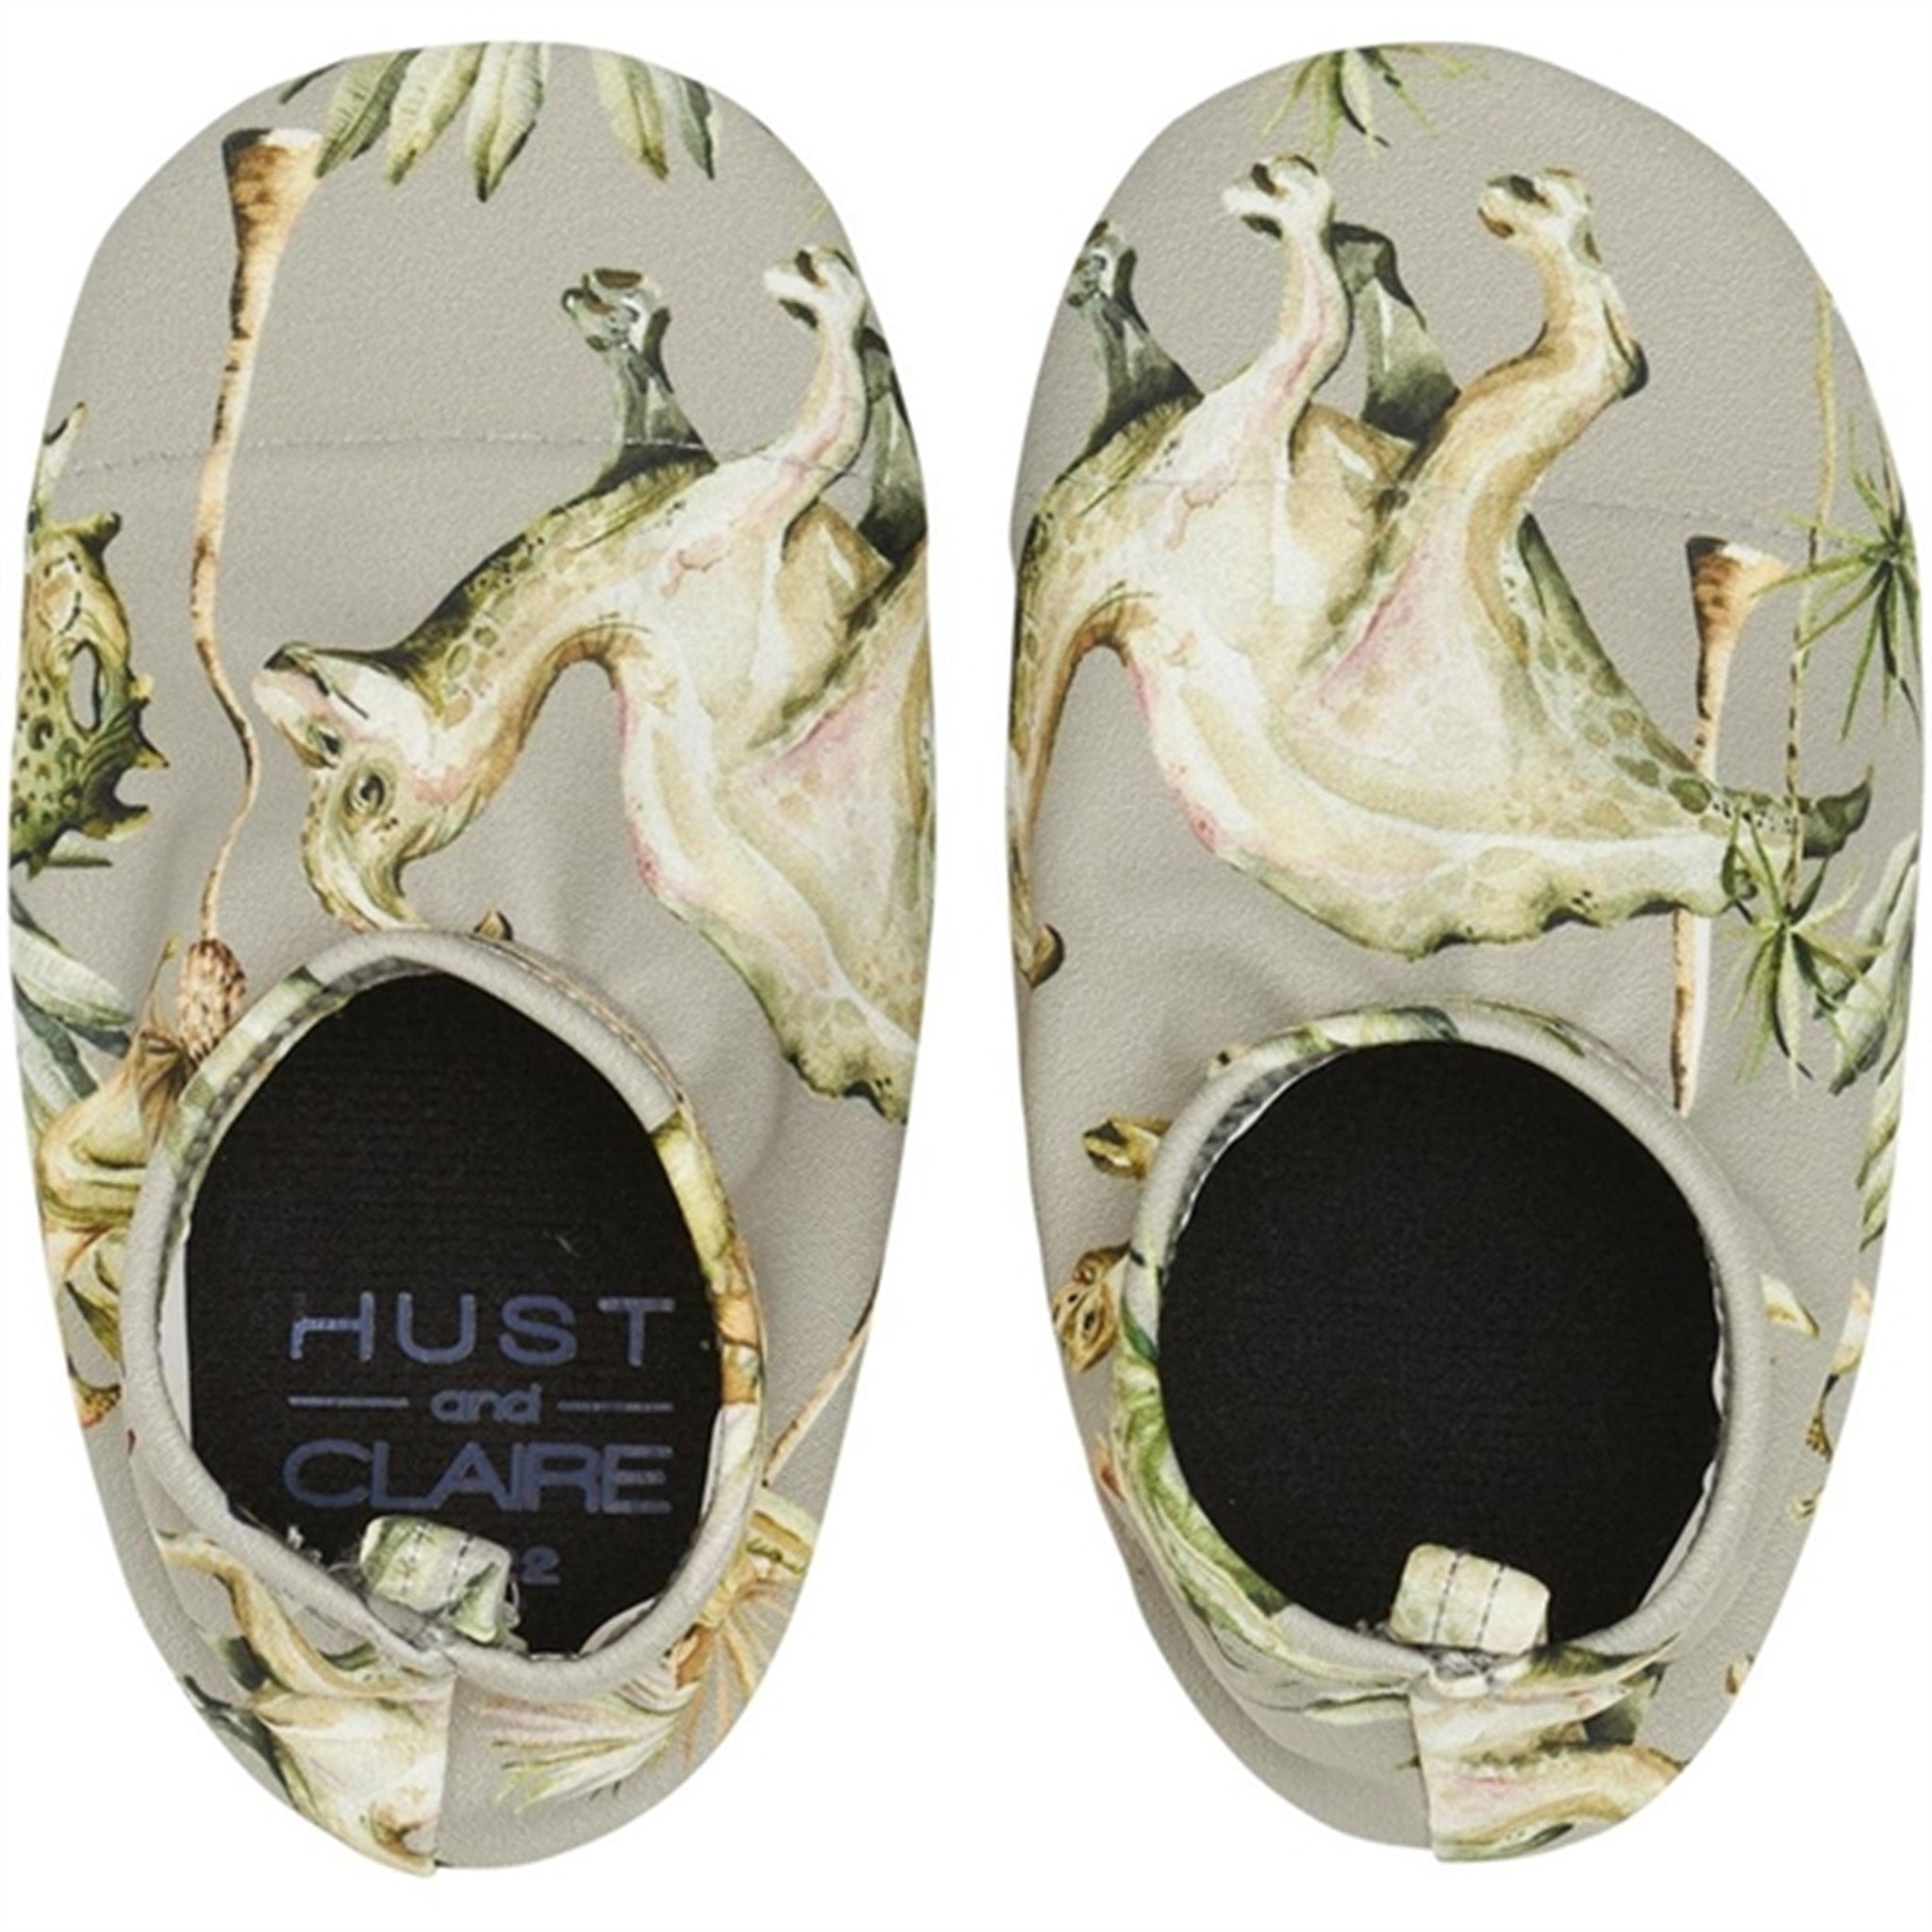 Hust & Claire Seagrass Fabian Swim Shoes 2